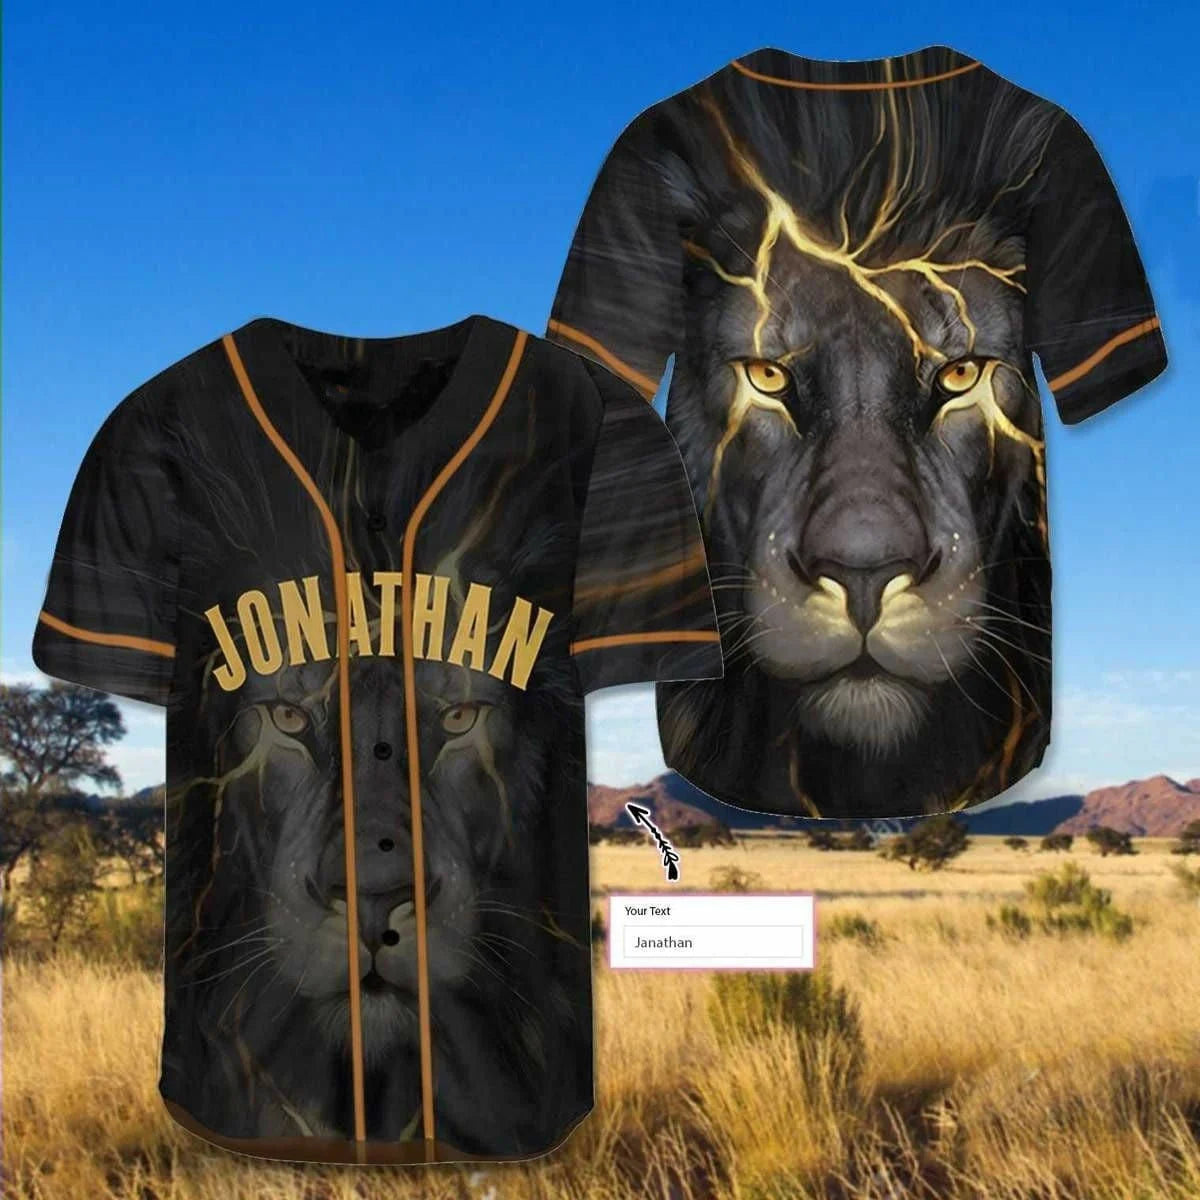 Personalized Jesus Baseball Jersey - Black Lion King Baseball Jersey - Gift For Christians - Lion Custom Baseball Jersey Shirt For Men and Women